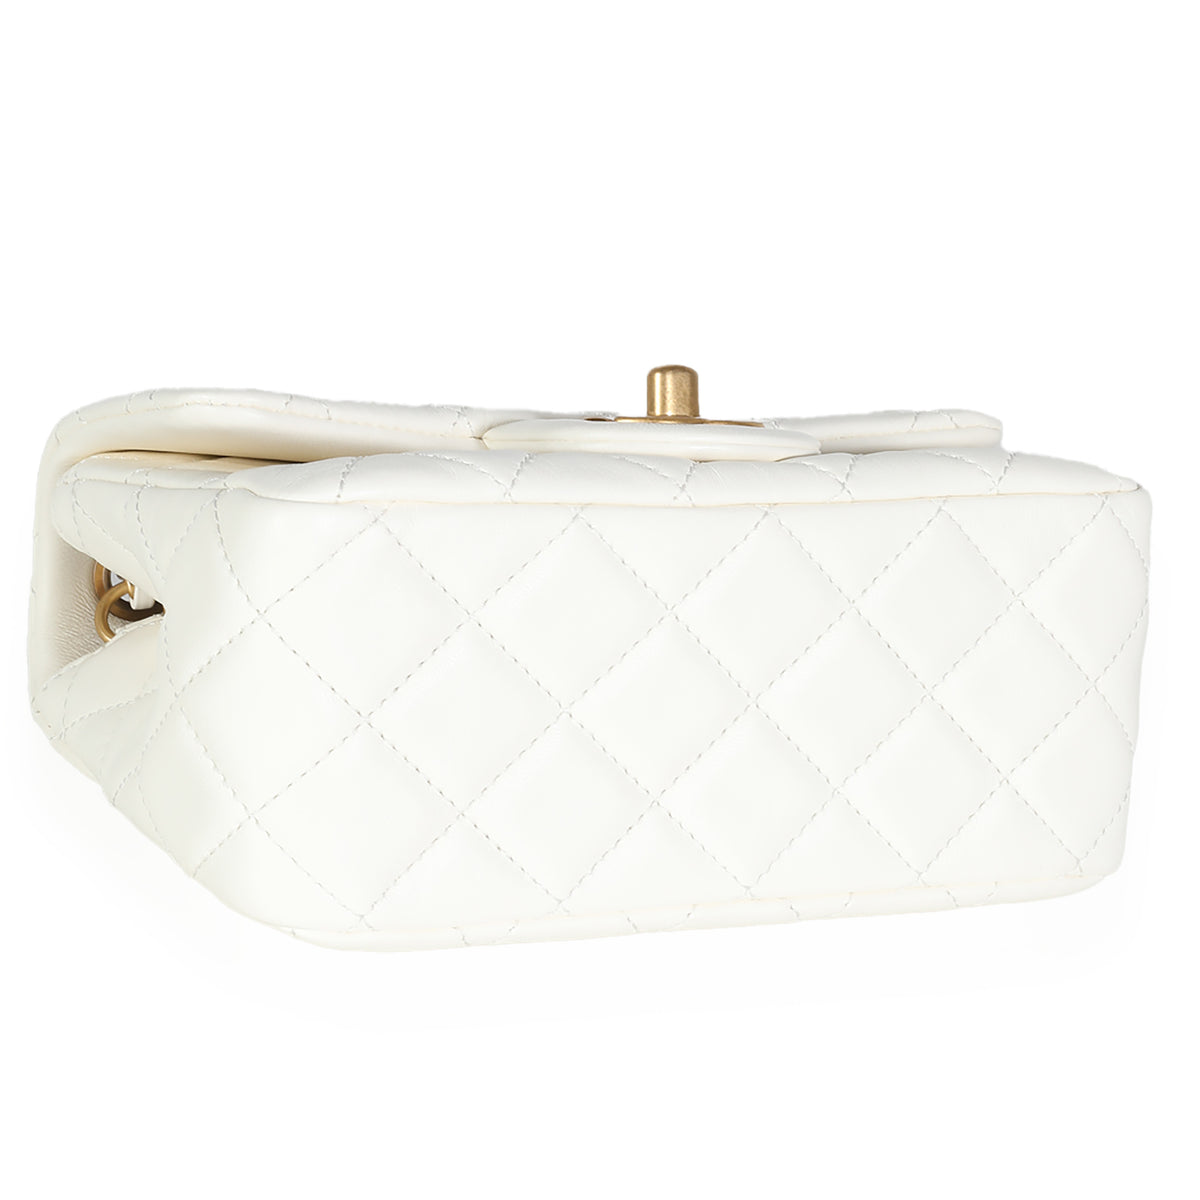 White Quilted Lambskin Pearl Crush Mini Flap Bag